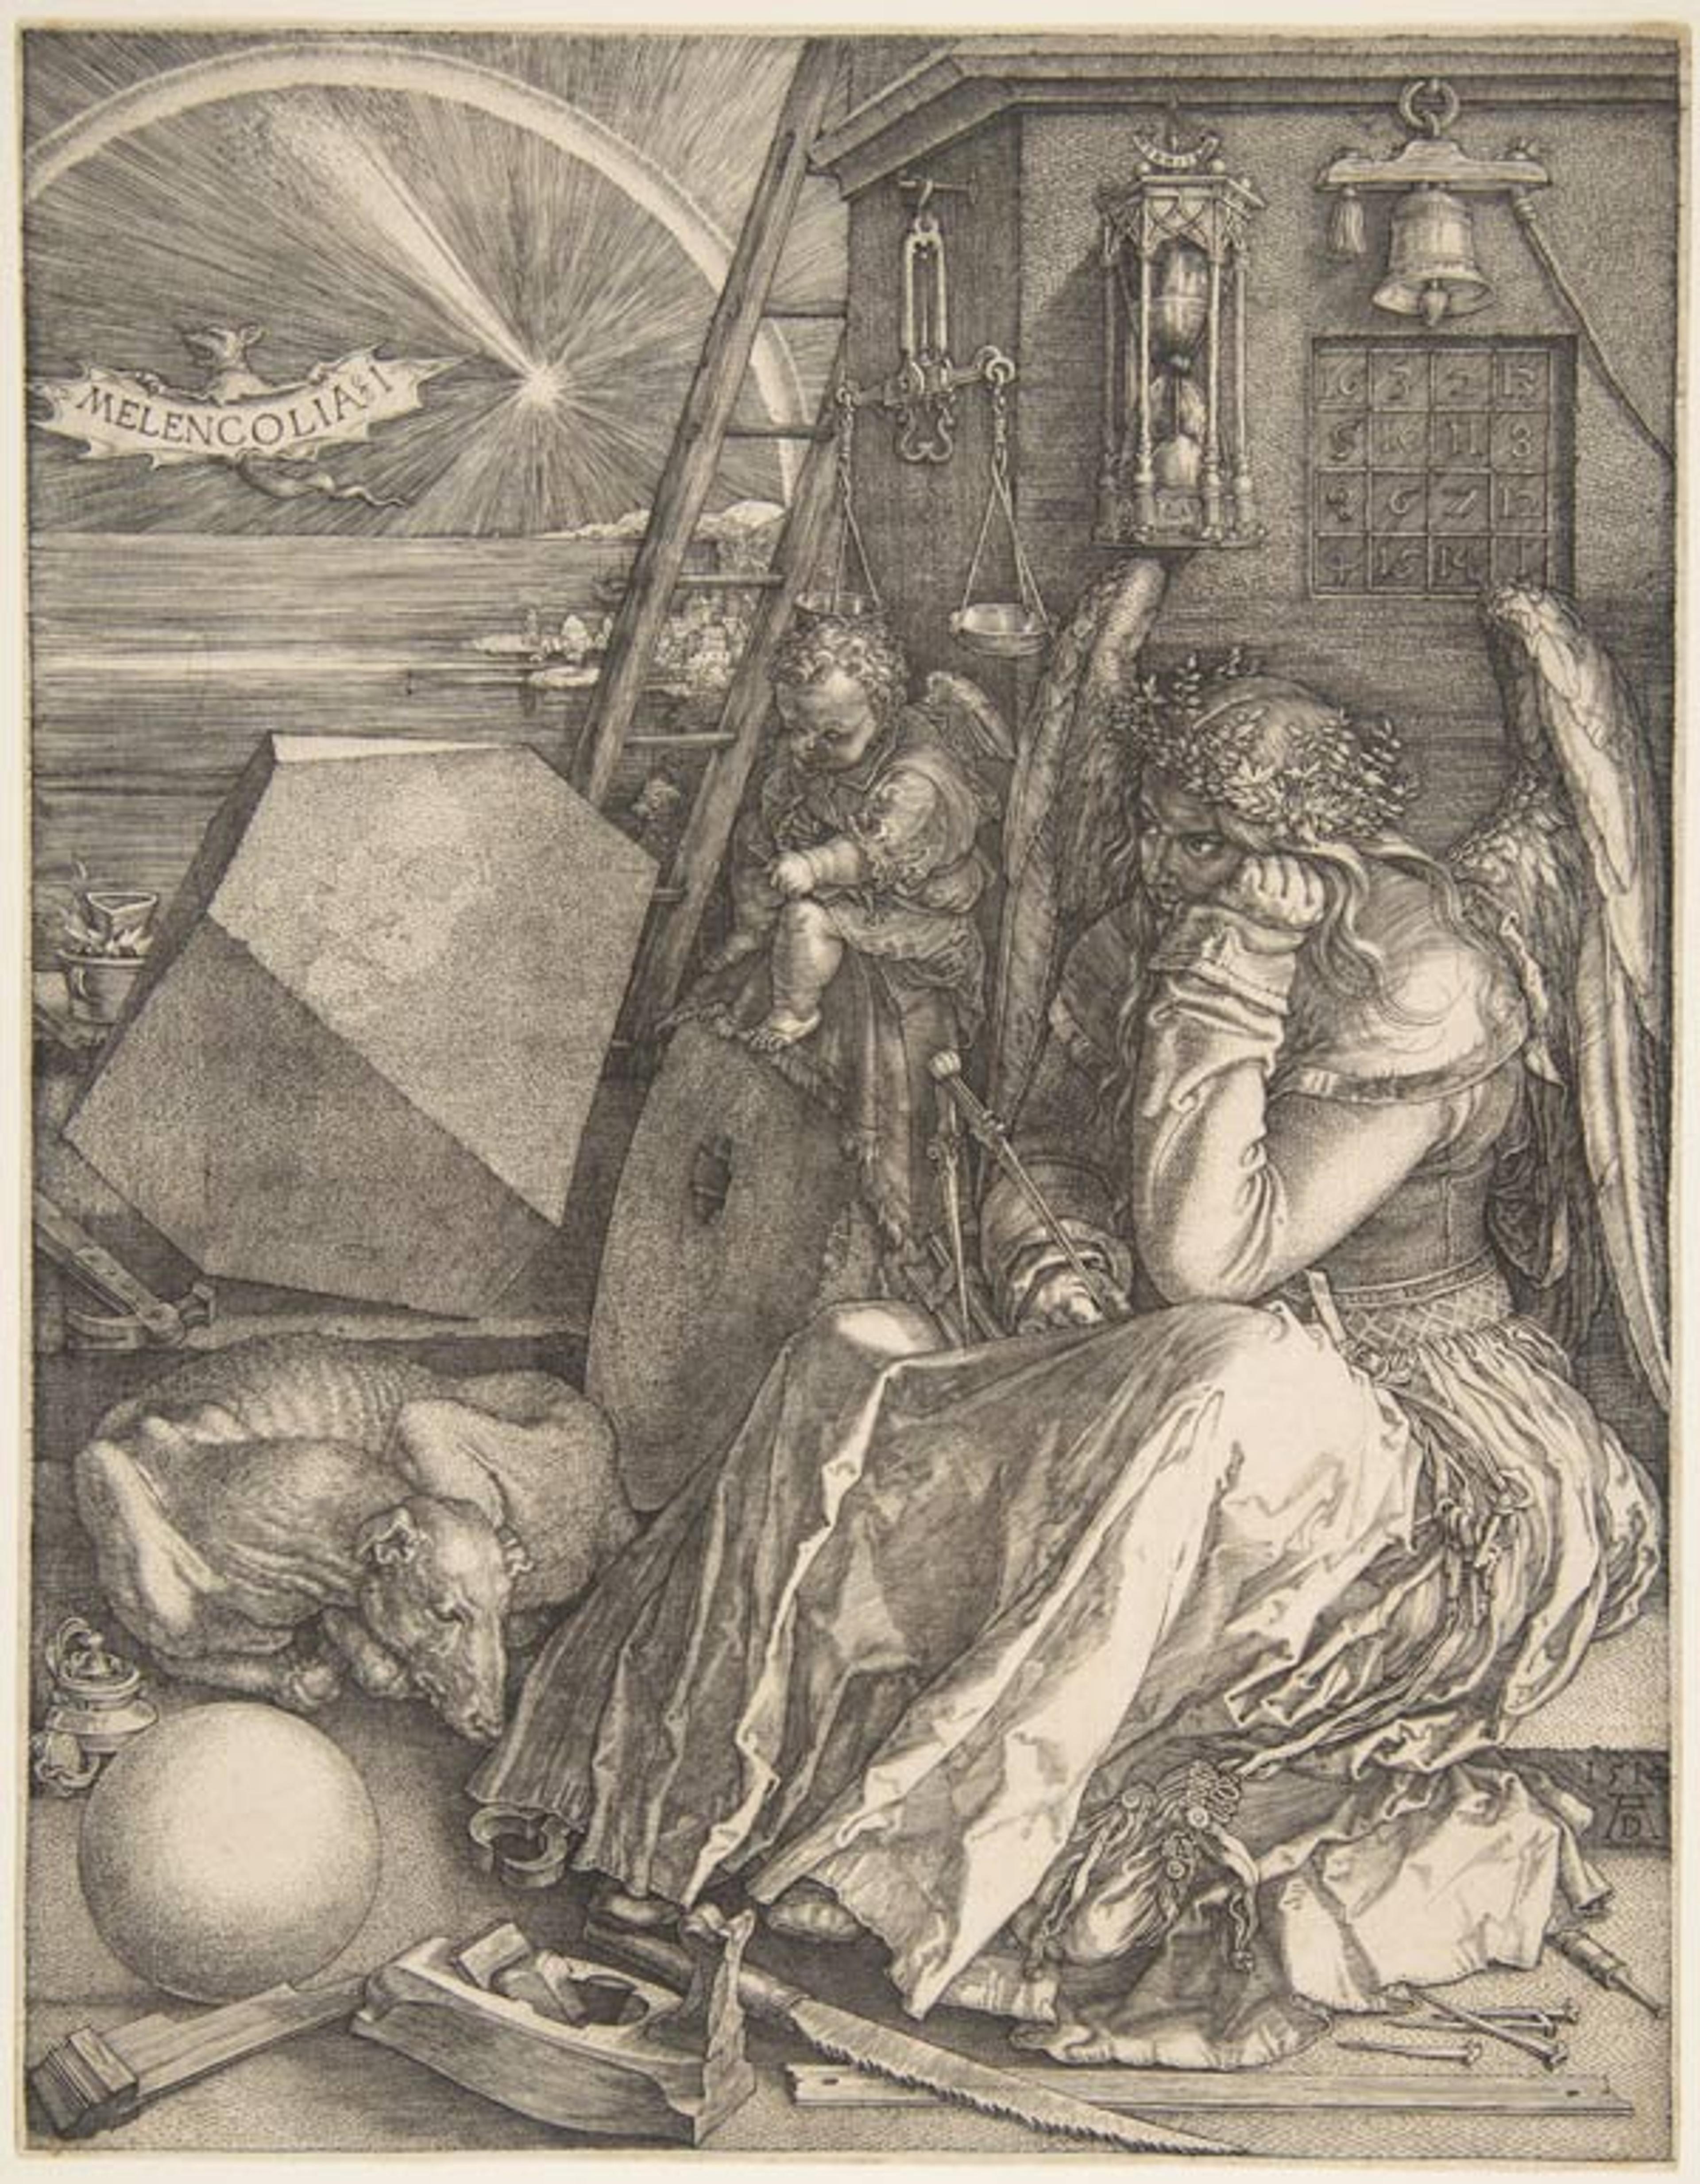 Albrecht Dürer (German, 1471-1528), Melencolia I, 1514 (different engraving)